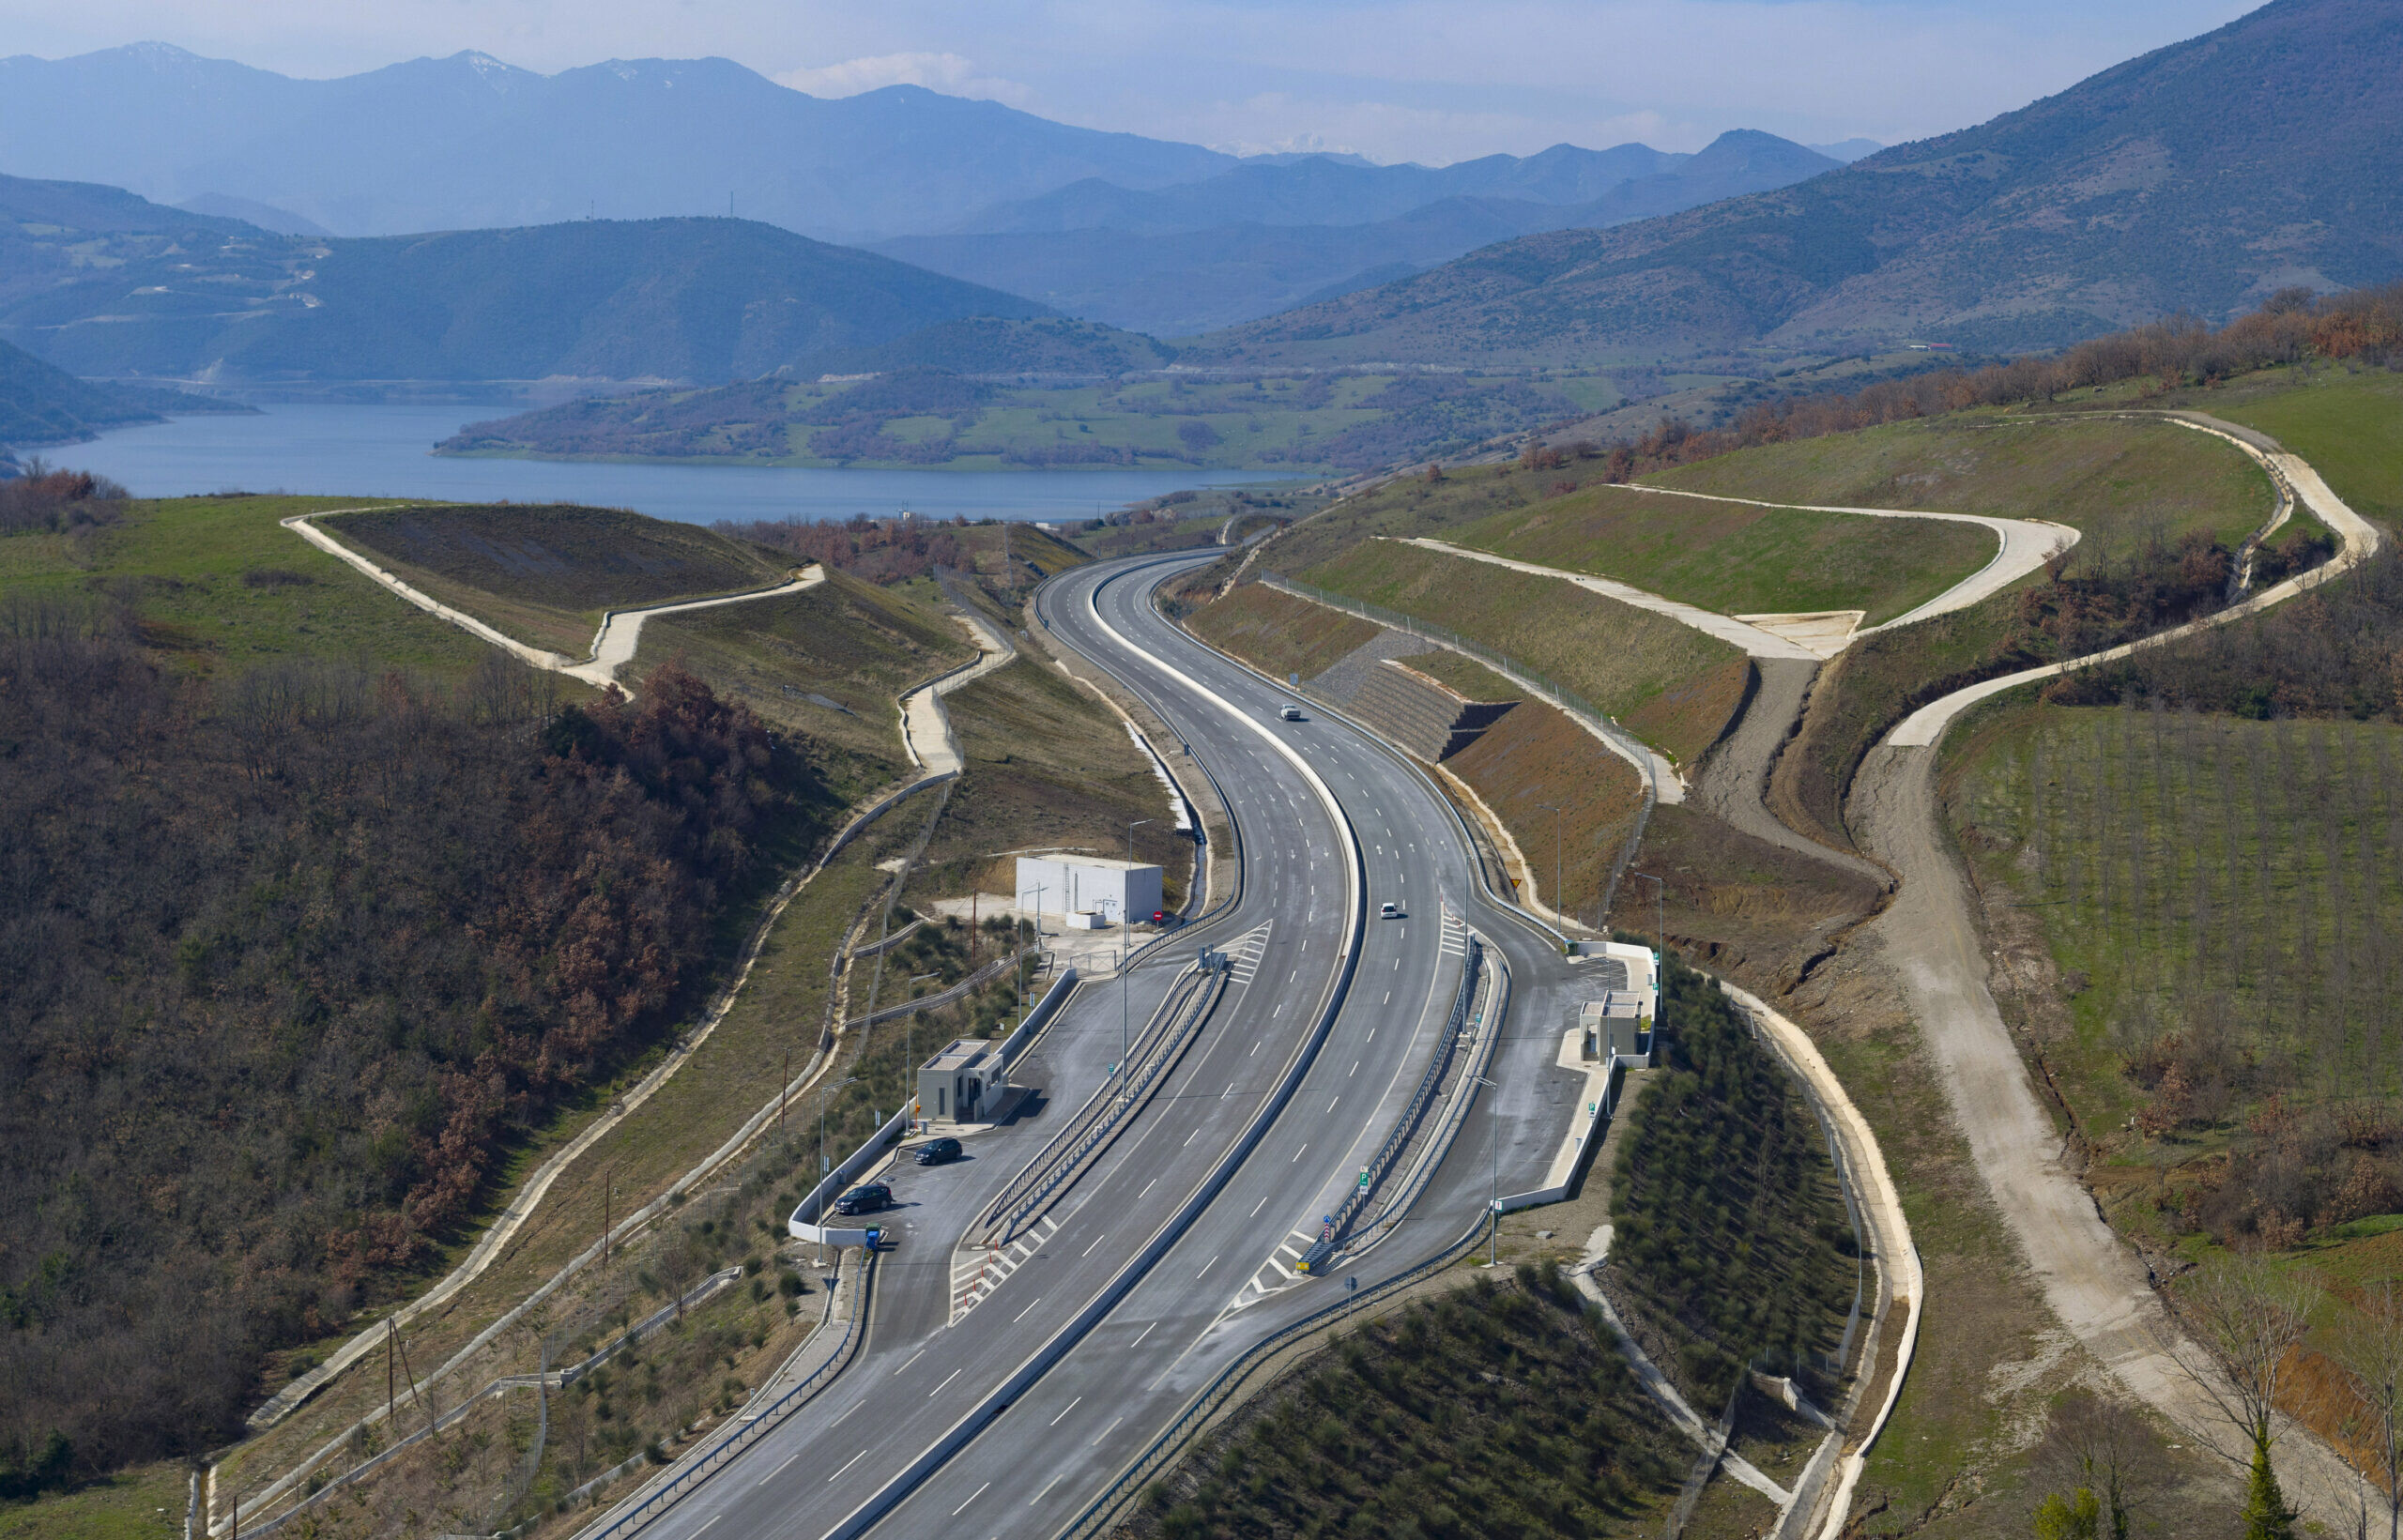 More information about "Η πορεία εξέλιξης της κατασκευής του αυτοκινητόδρομου Κεντρικής Ελλάδας – Ε65"